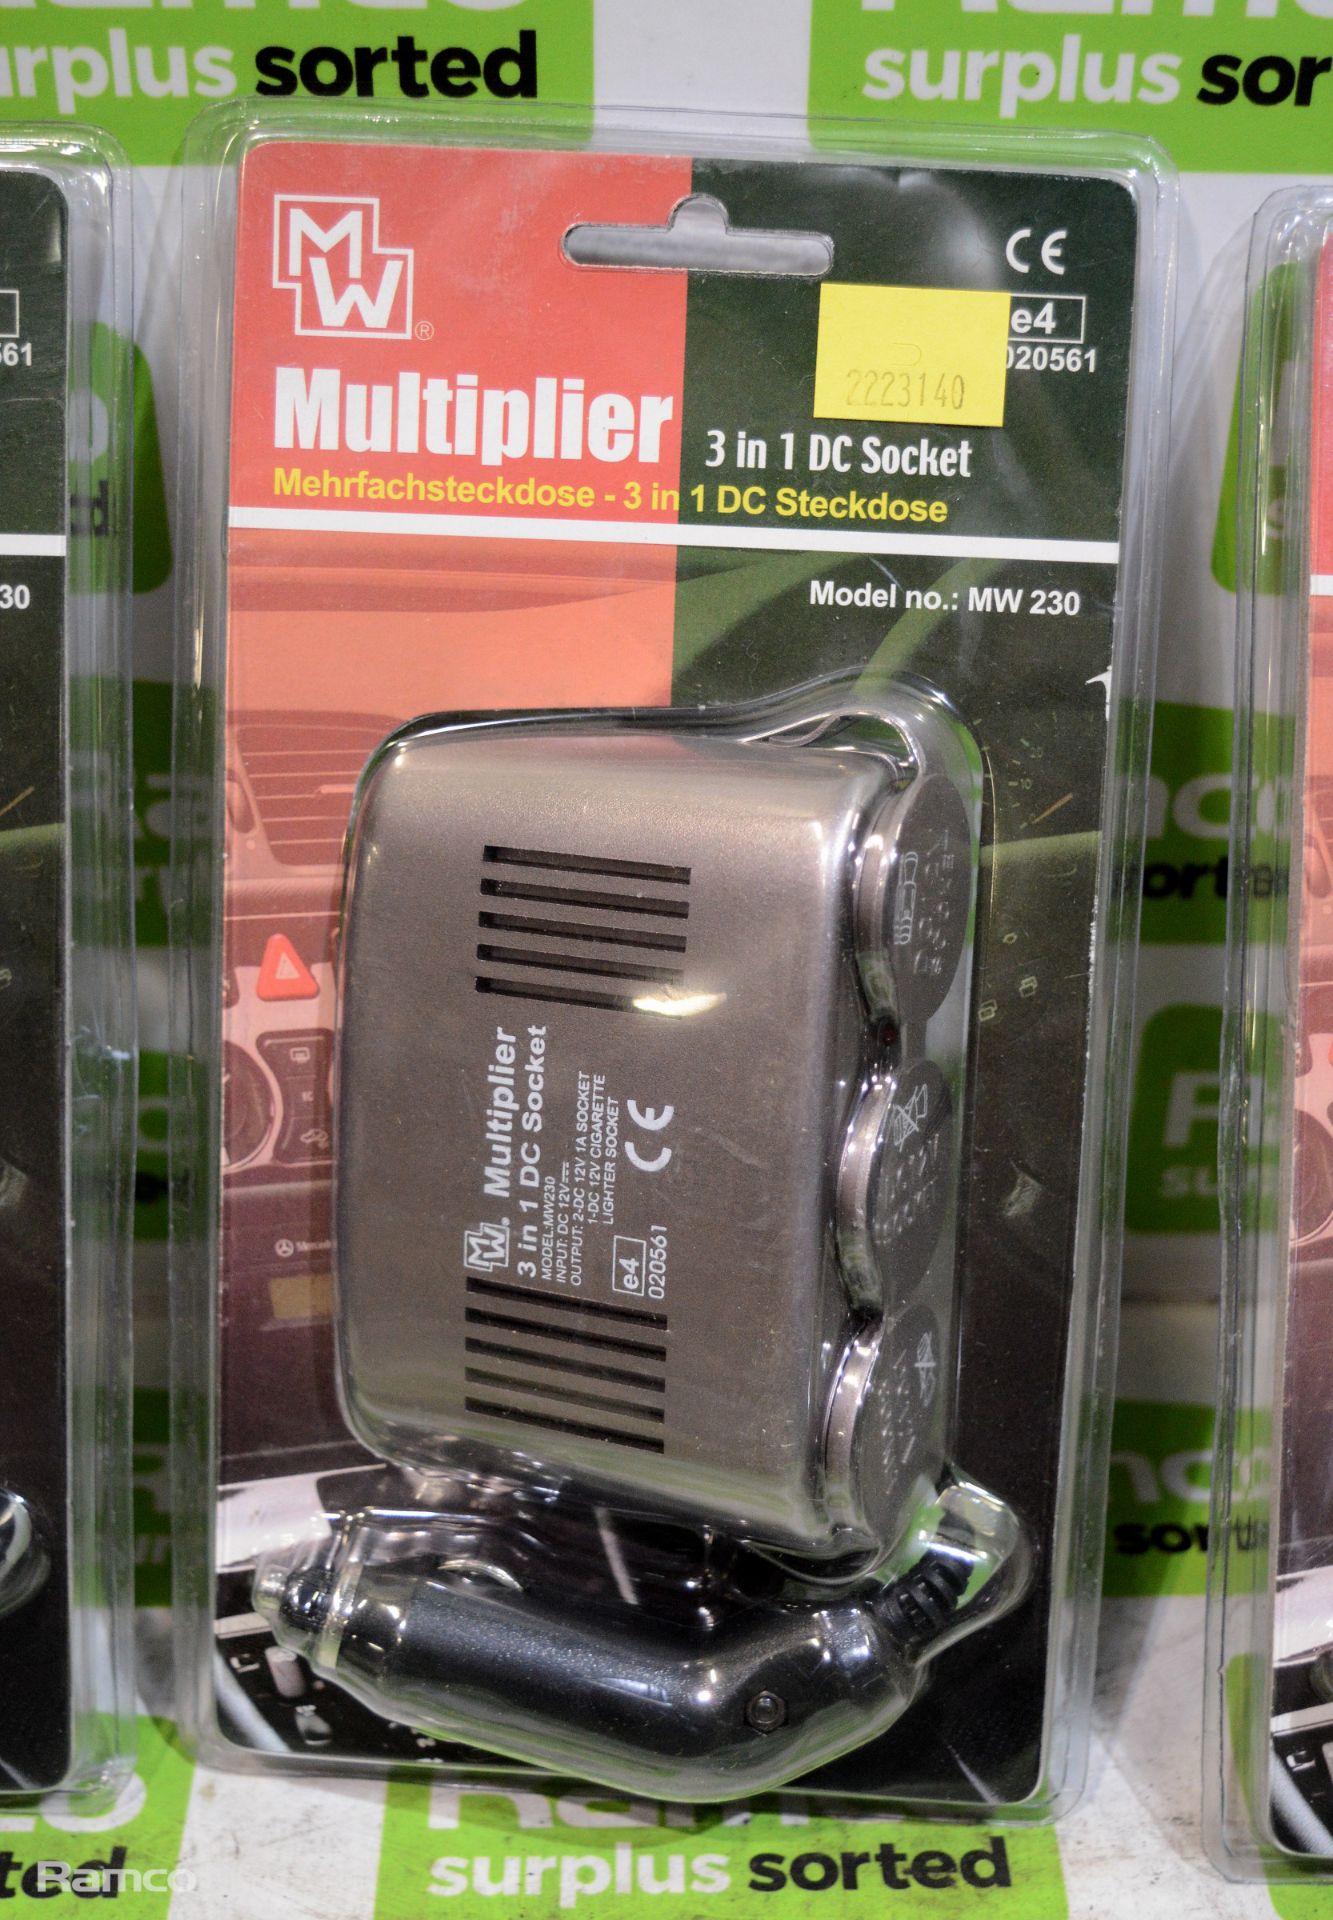 6x MW 230 Multiplier 3 in 1 DC Socket - 12vdc - Image 2 of 3